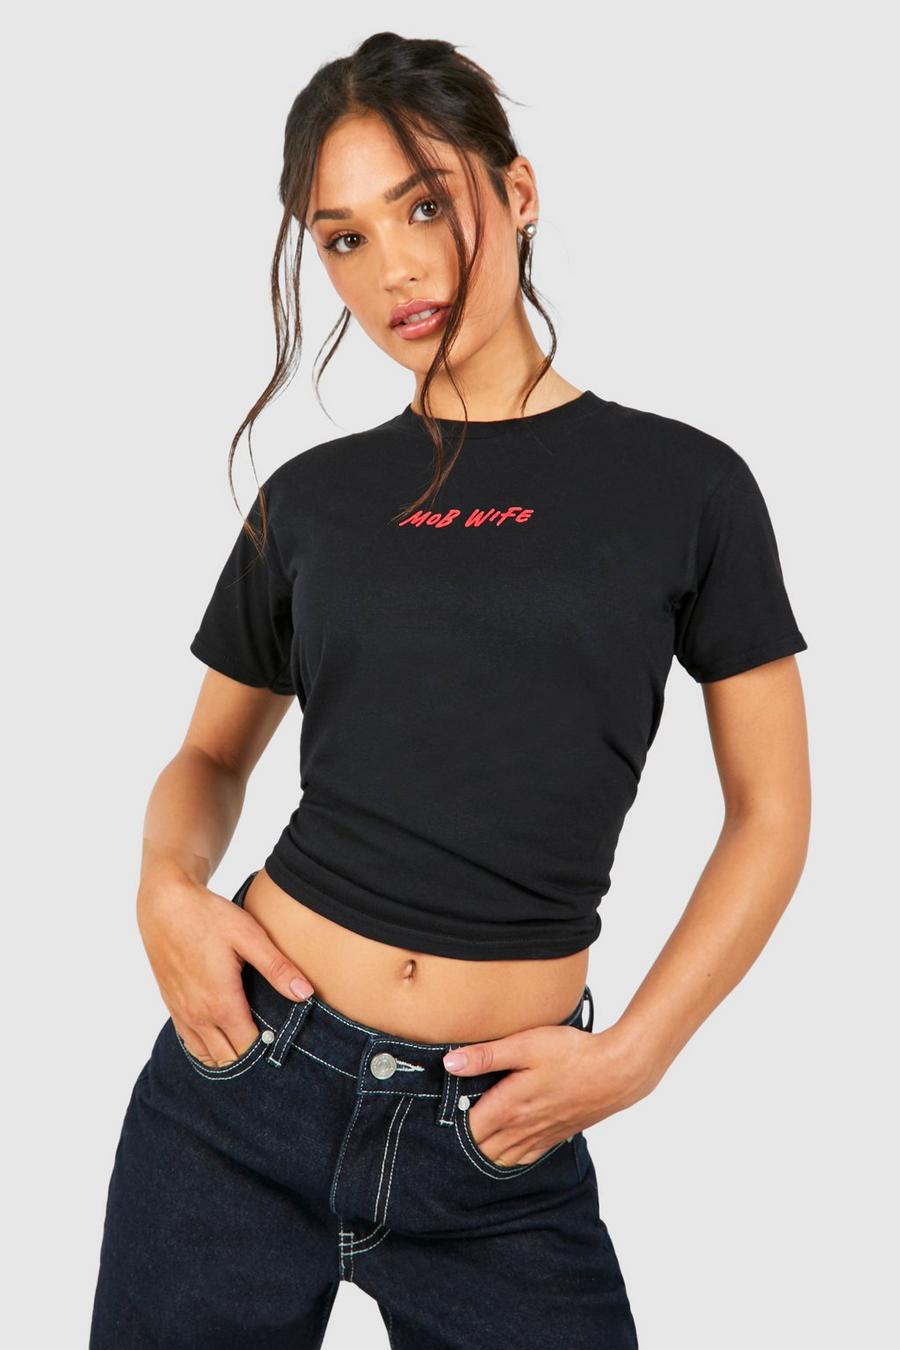 Petite - T-shirt court à slogan Mob Wife, Black